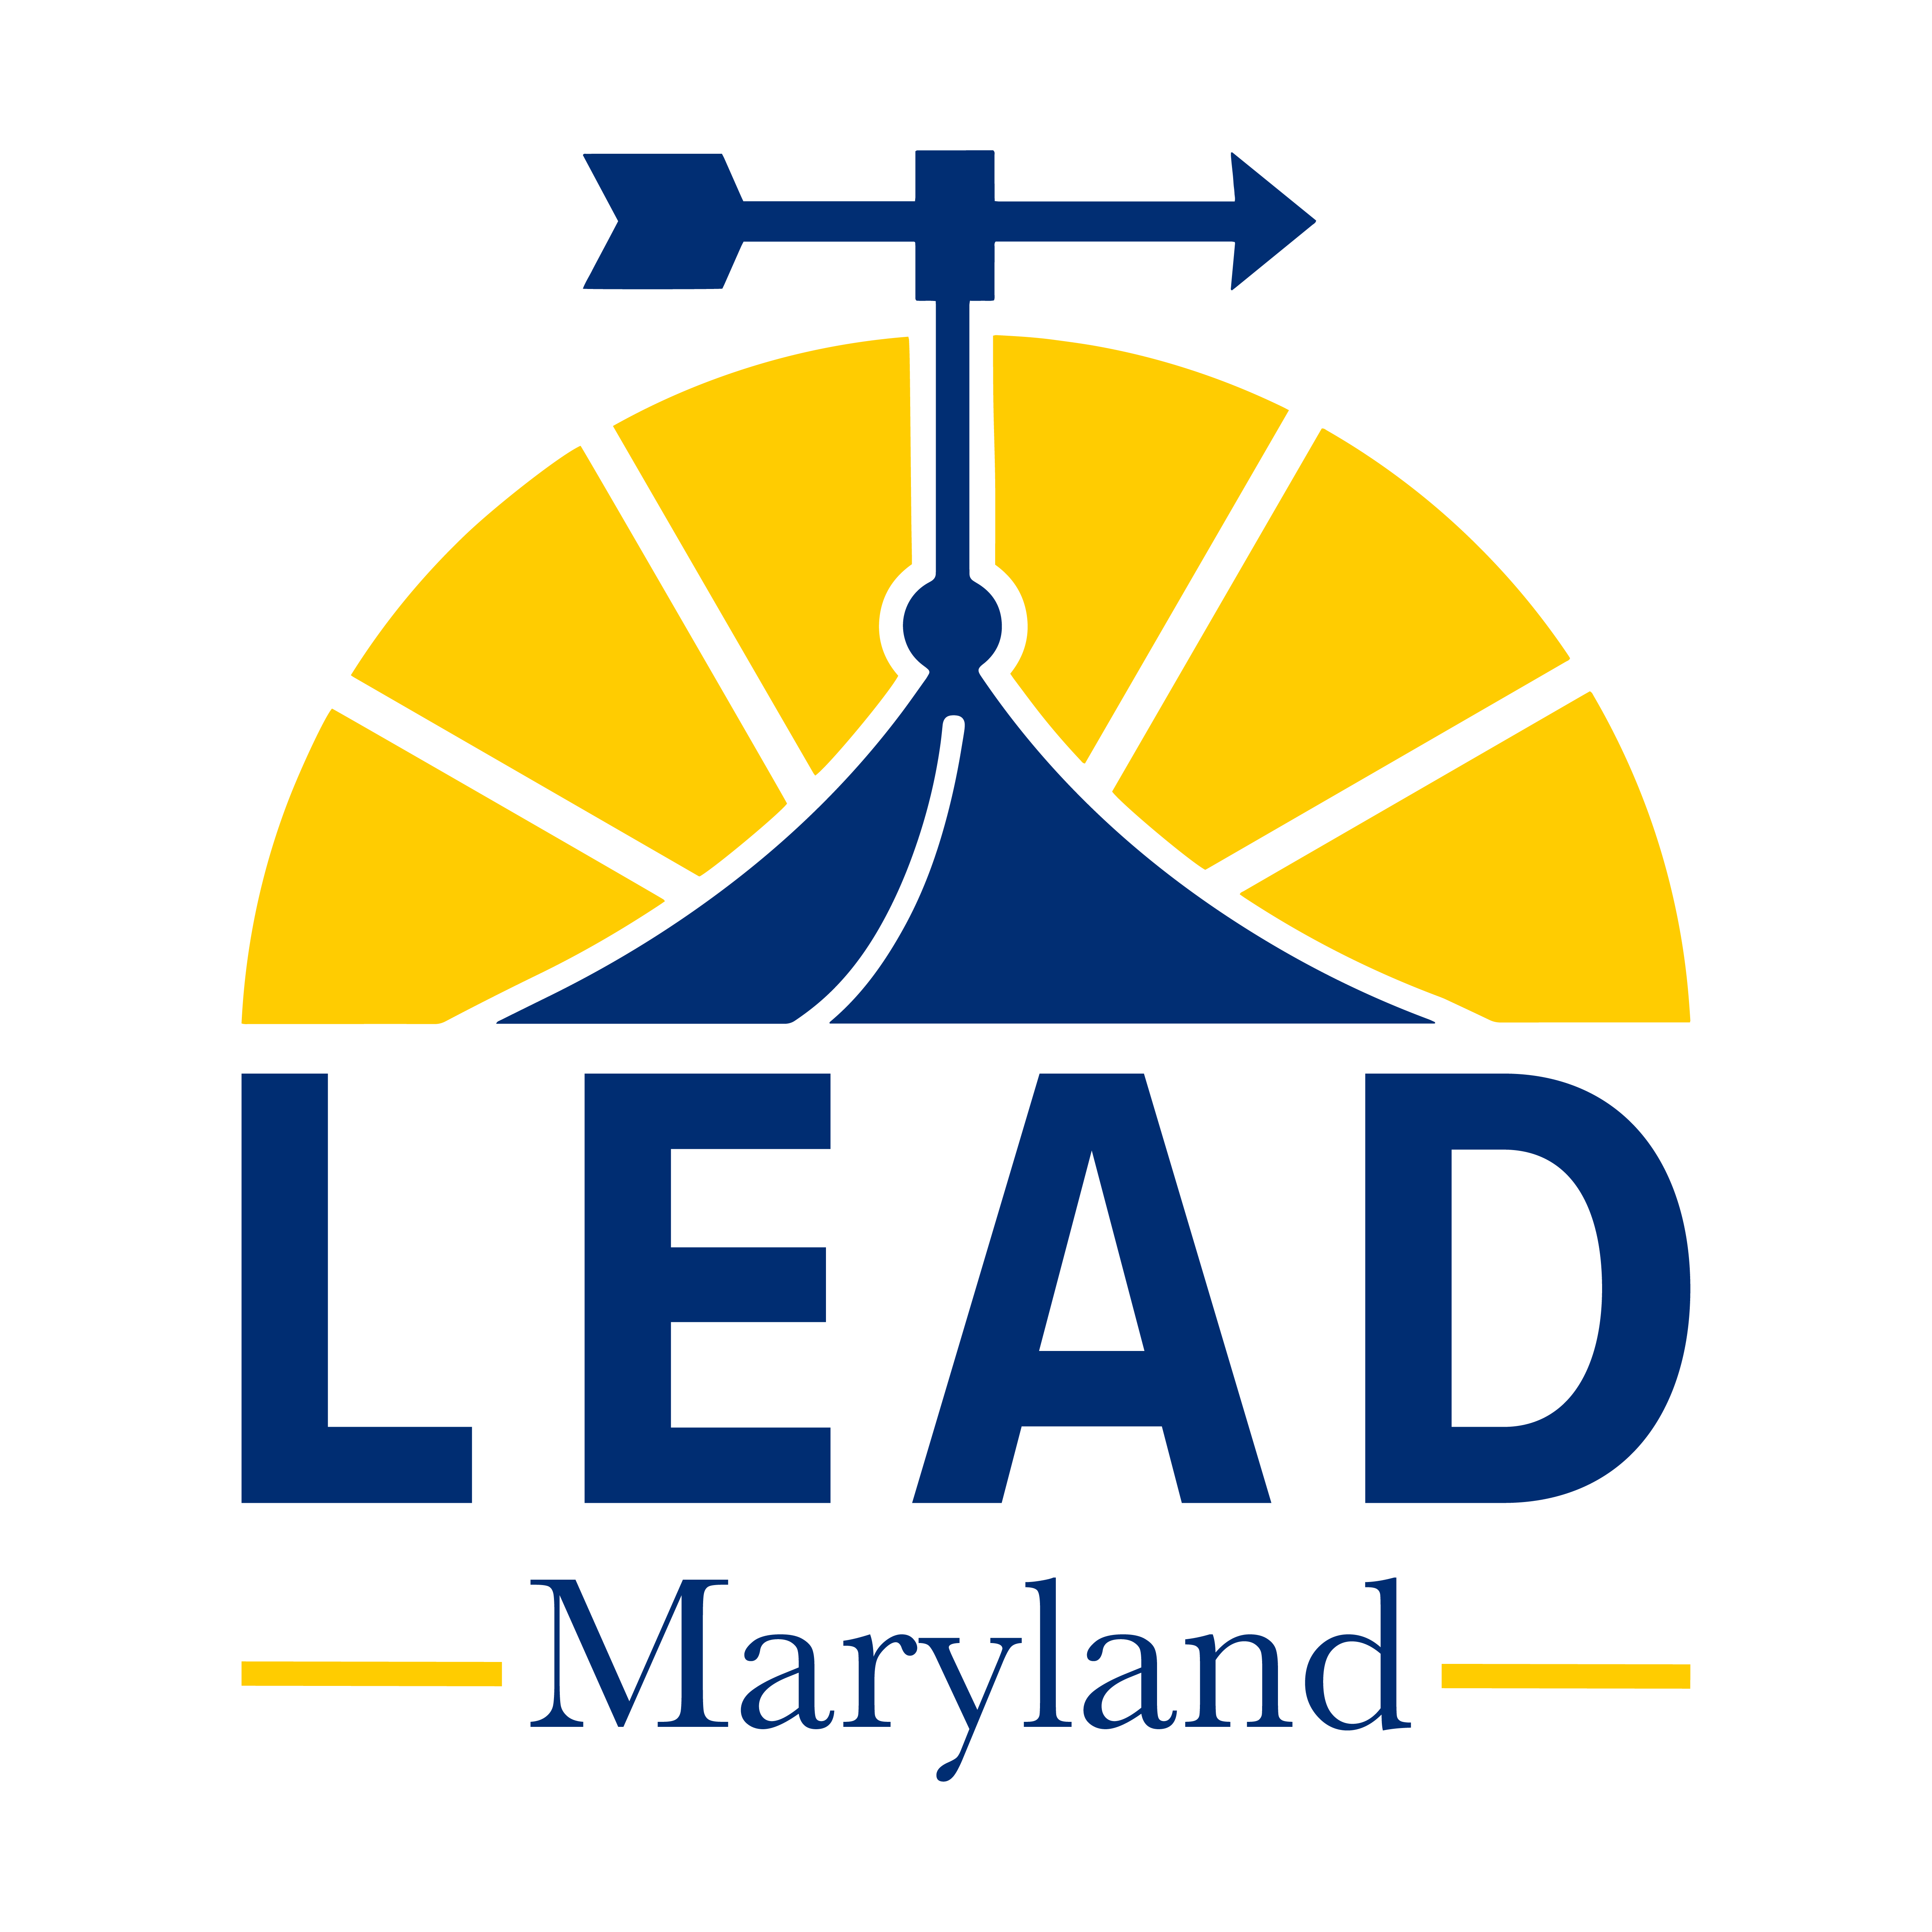 LEAD Maryland logo